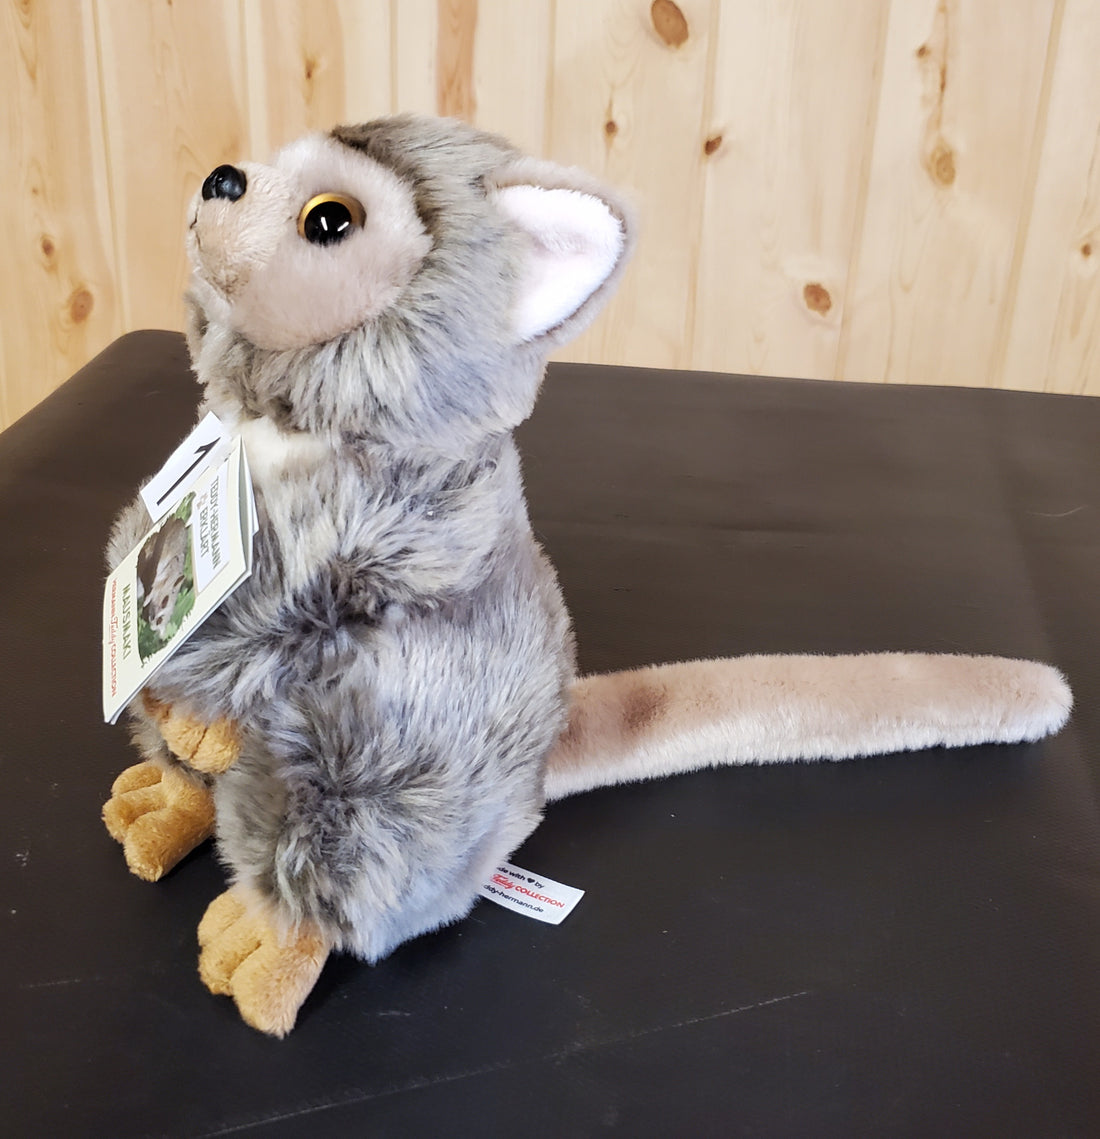 Mouse Lemur - 8.25" Plush by Teddy Hermann of Germany